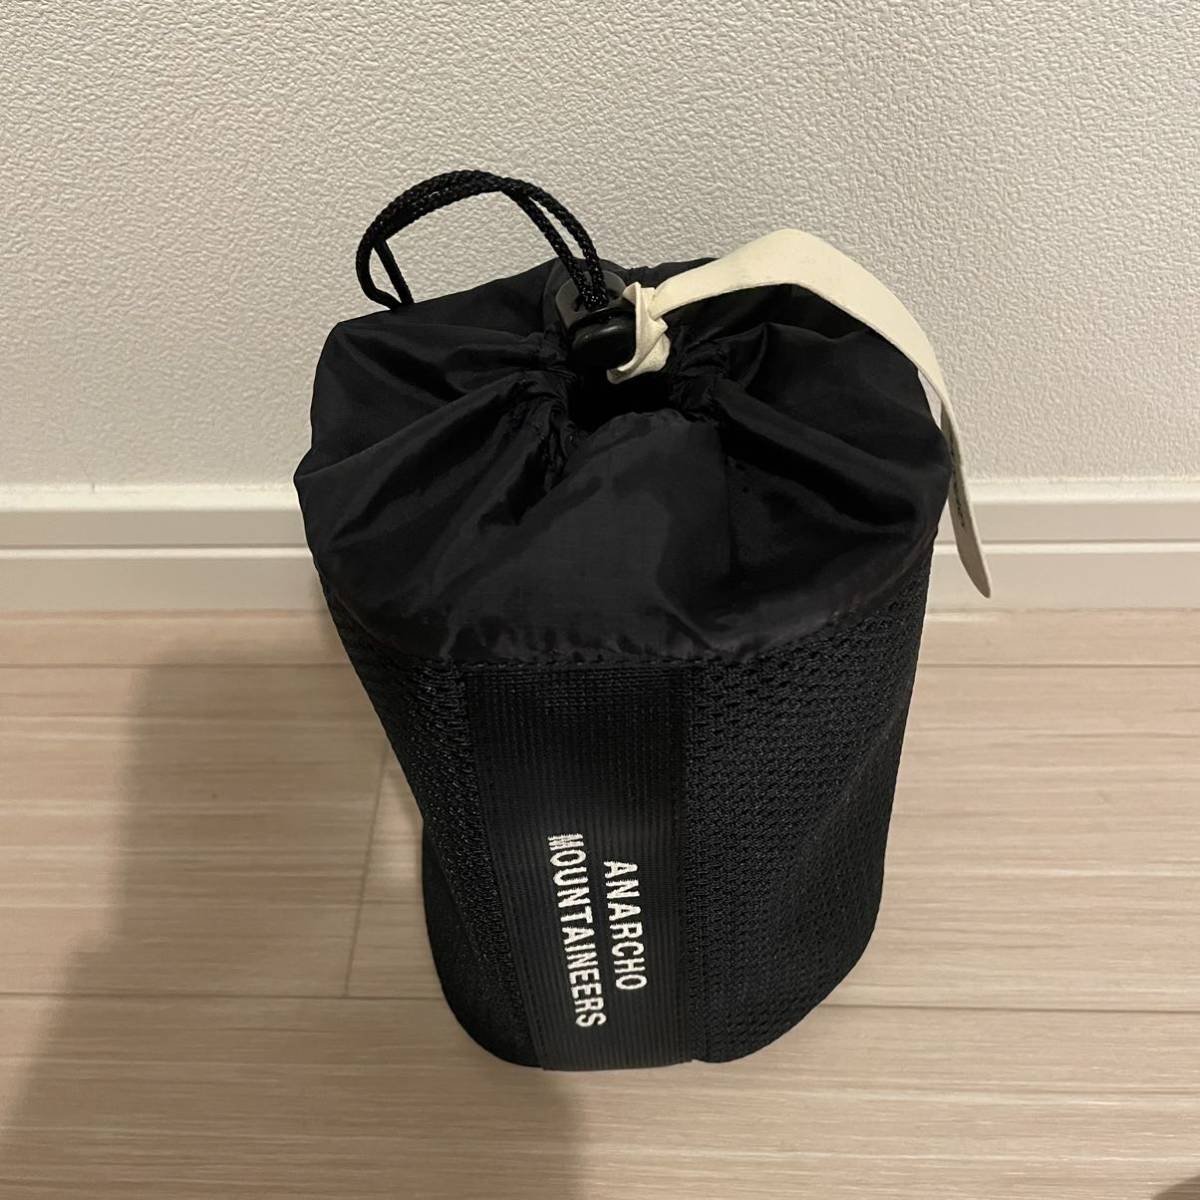 Mountain Research 2951 Mesh Chalk Bag BLACK черный новый товар полная распродажа товар mountain li search SETT сетка сумка для мела 